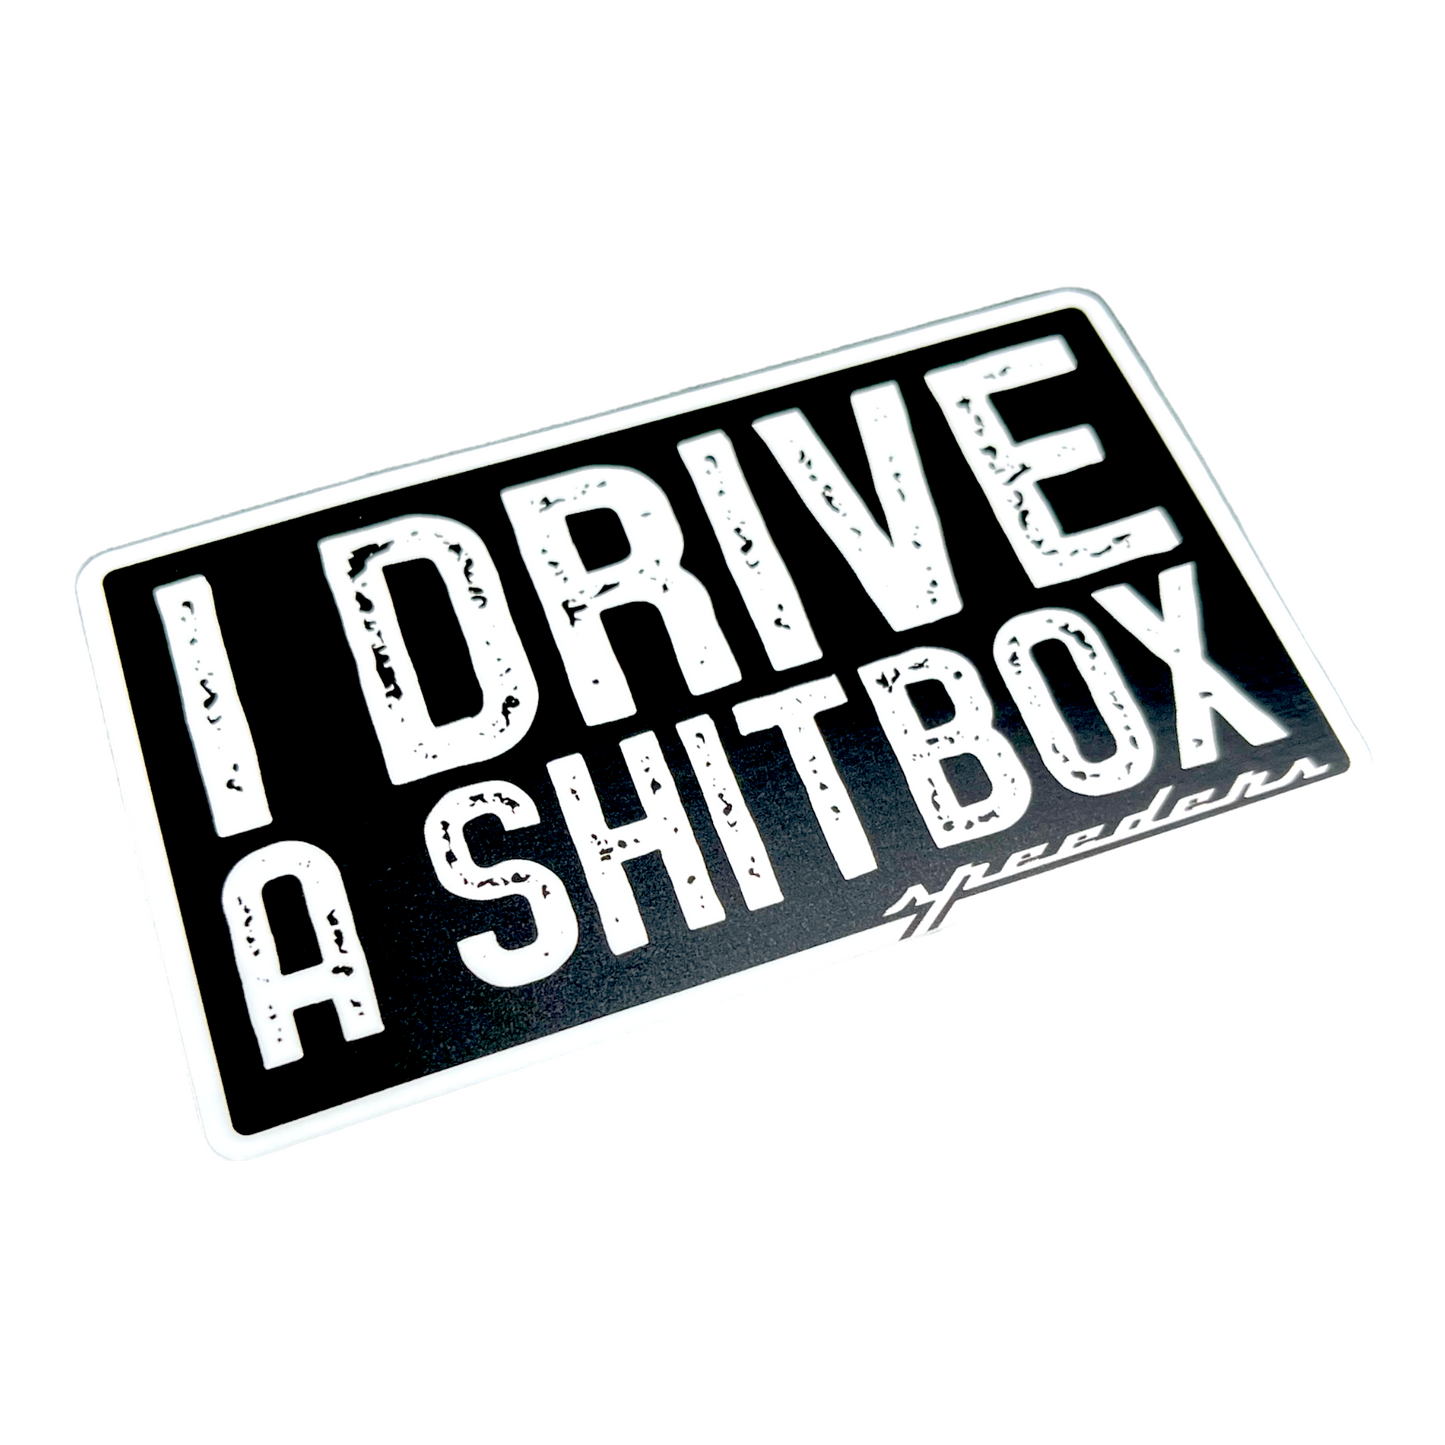 "I Drive A Shitbox" Automotive Sticker (Black and White))